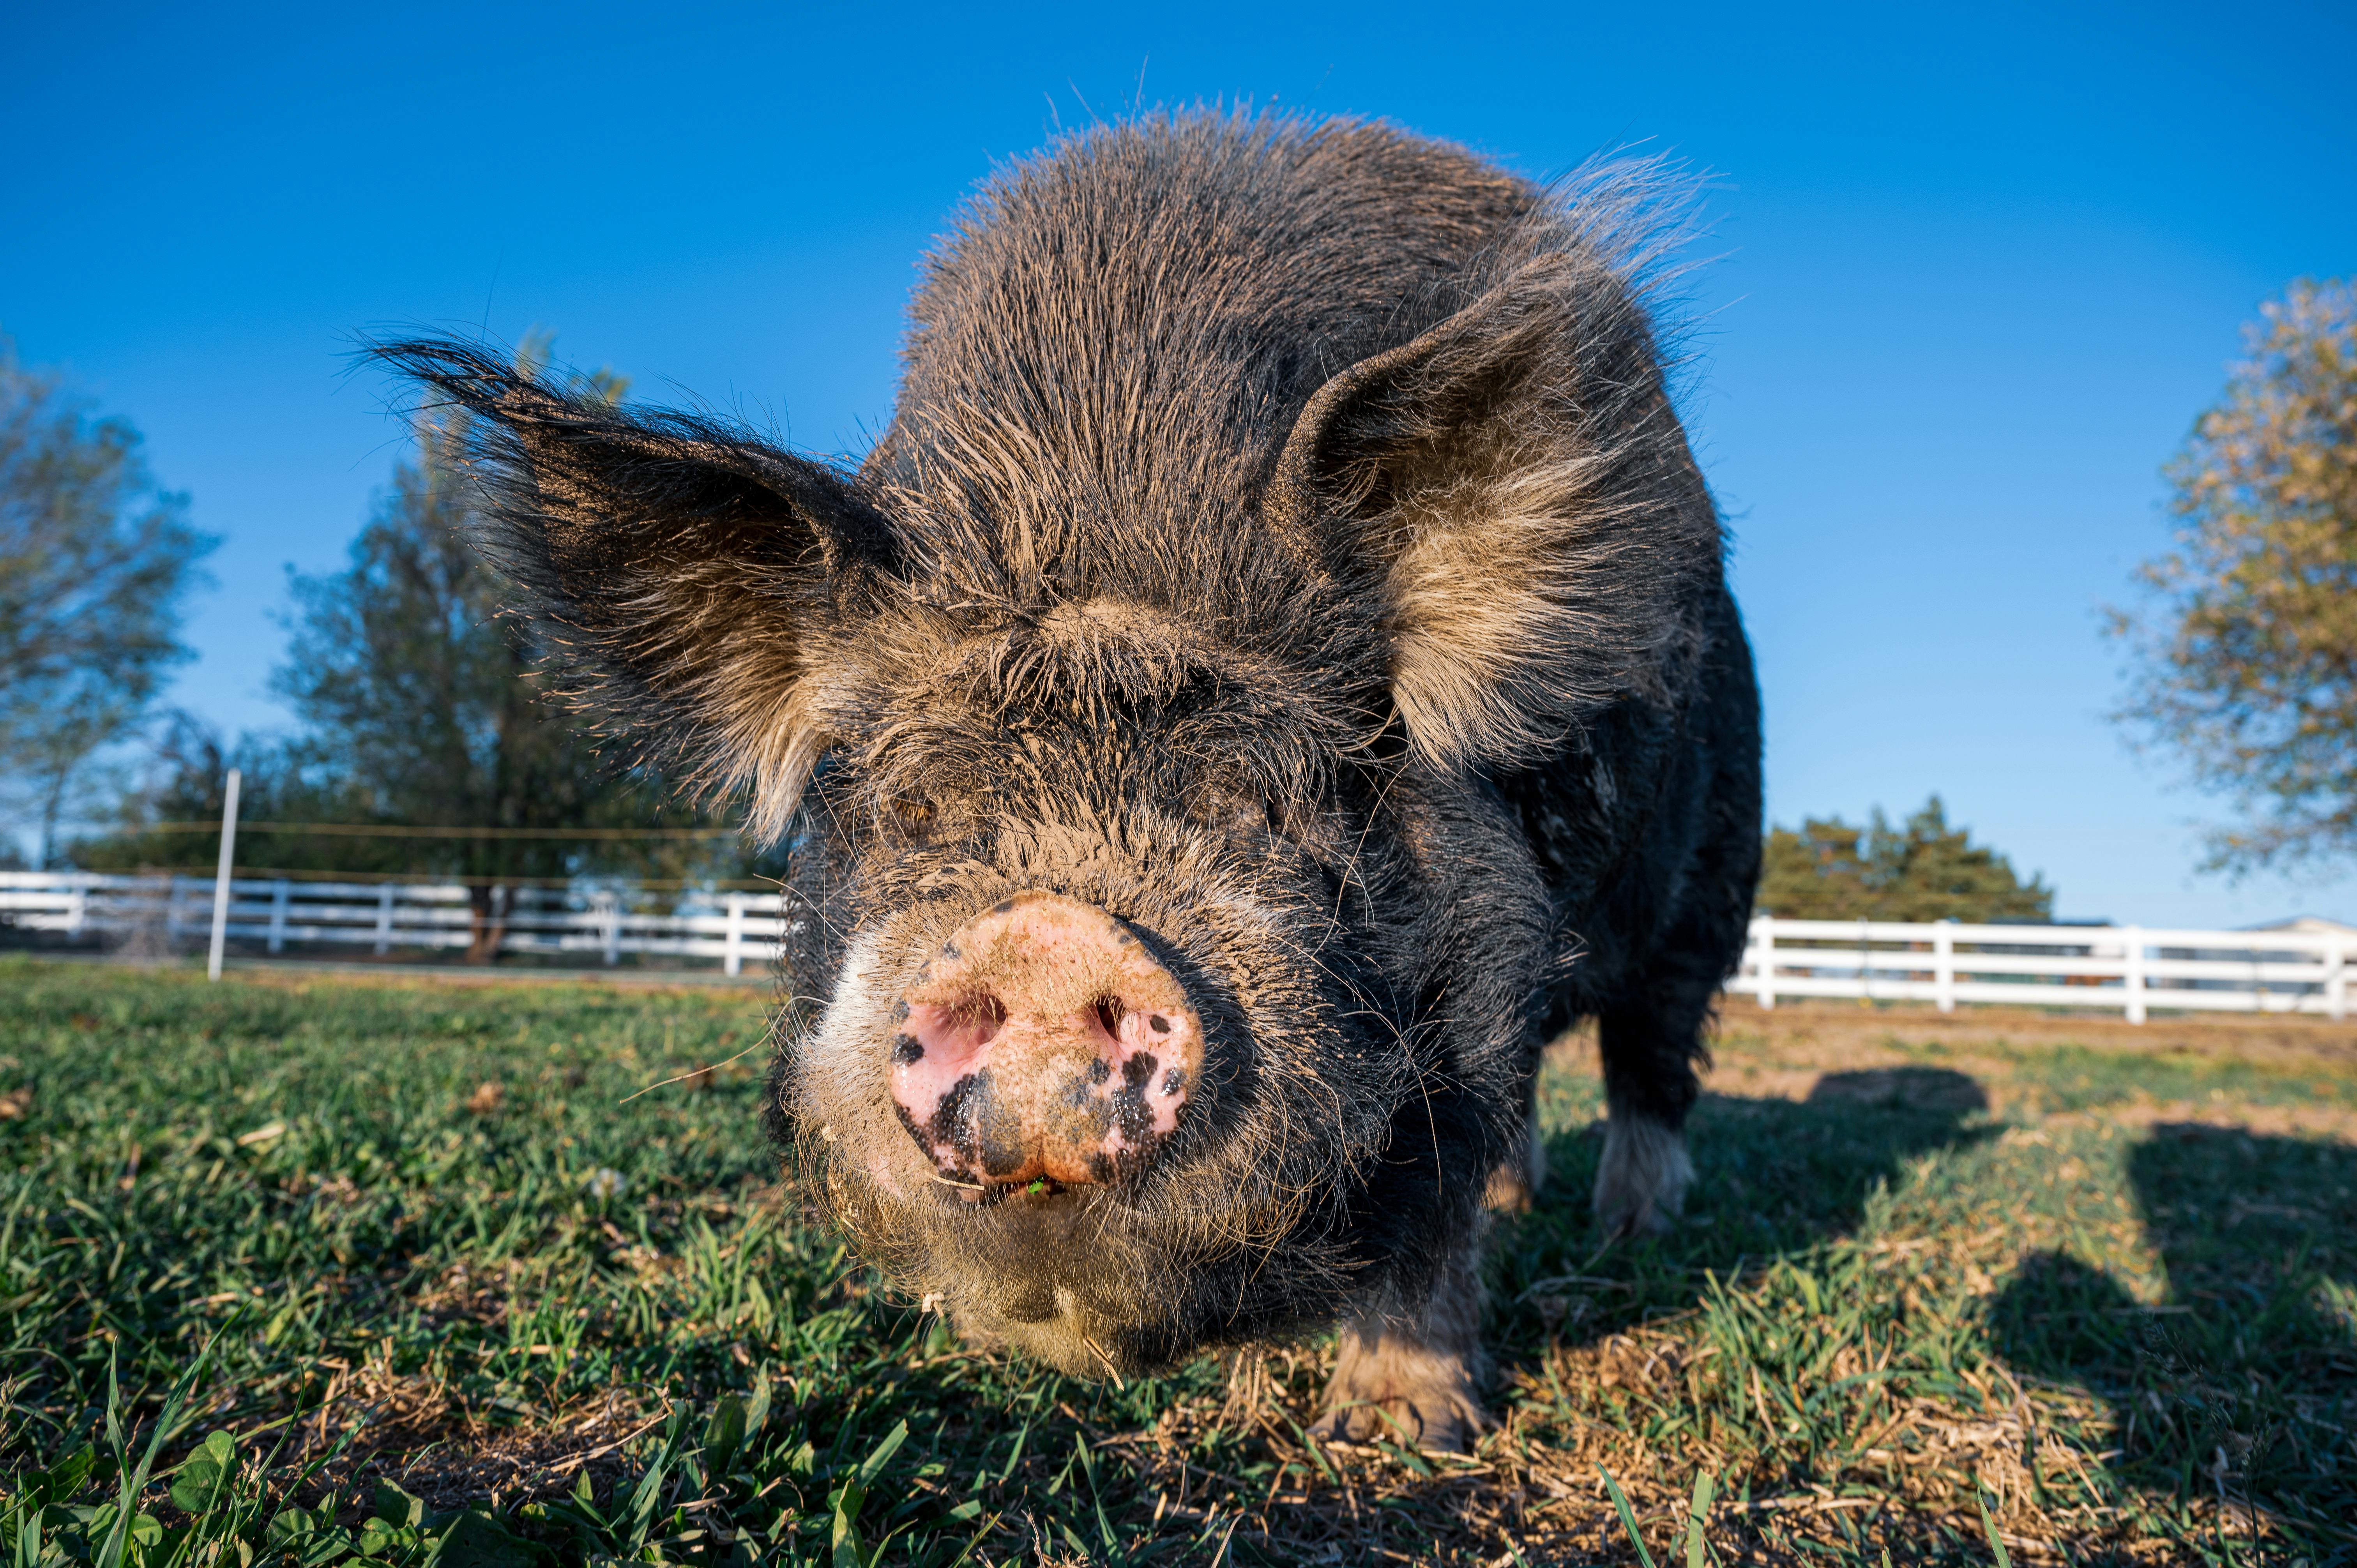 pig on grassy ground in sunny day